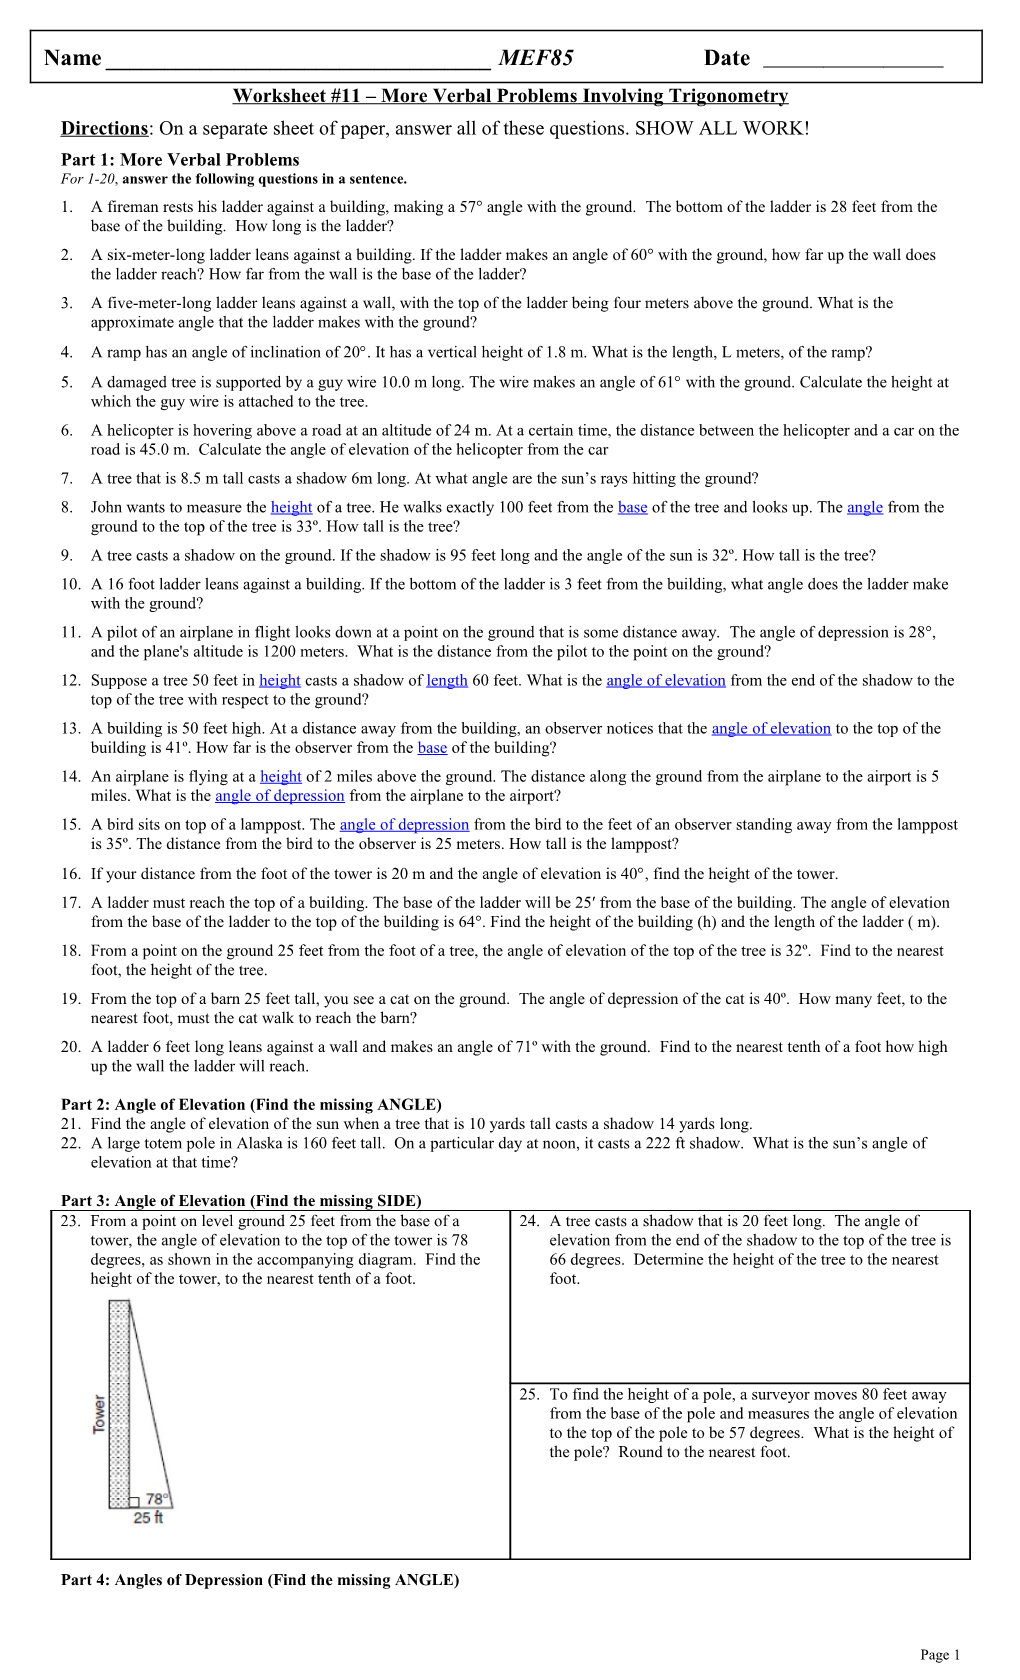 Worksheet #11 More Verbal Problems Involving Trigonometry